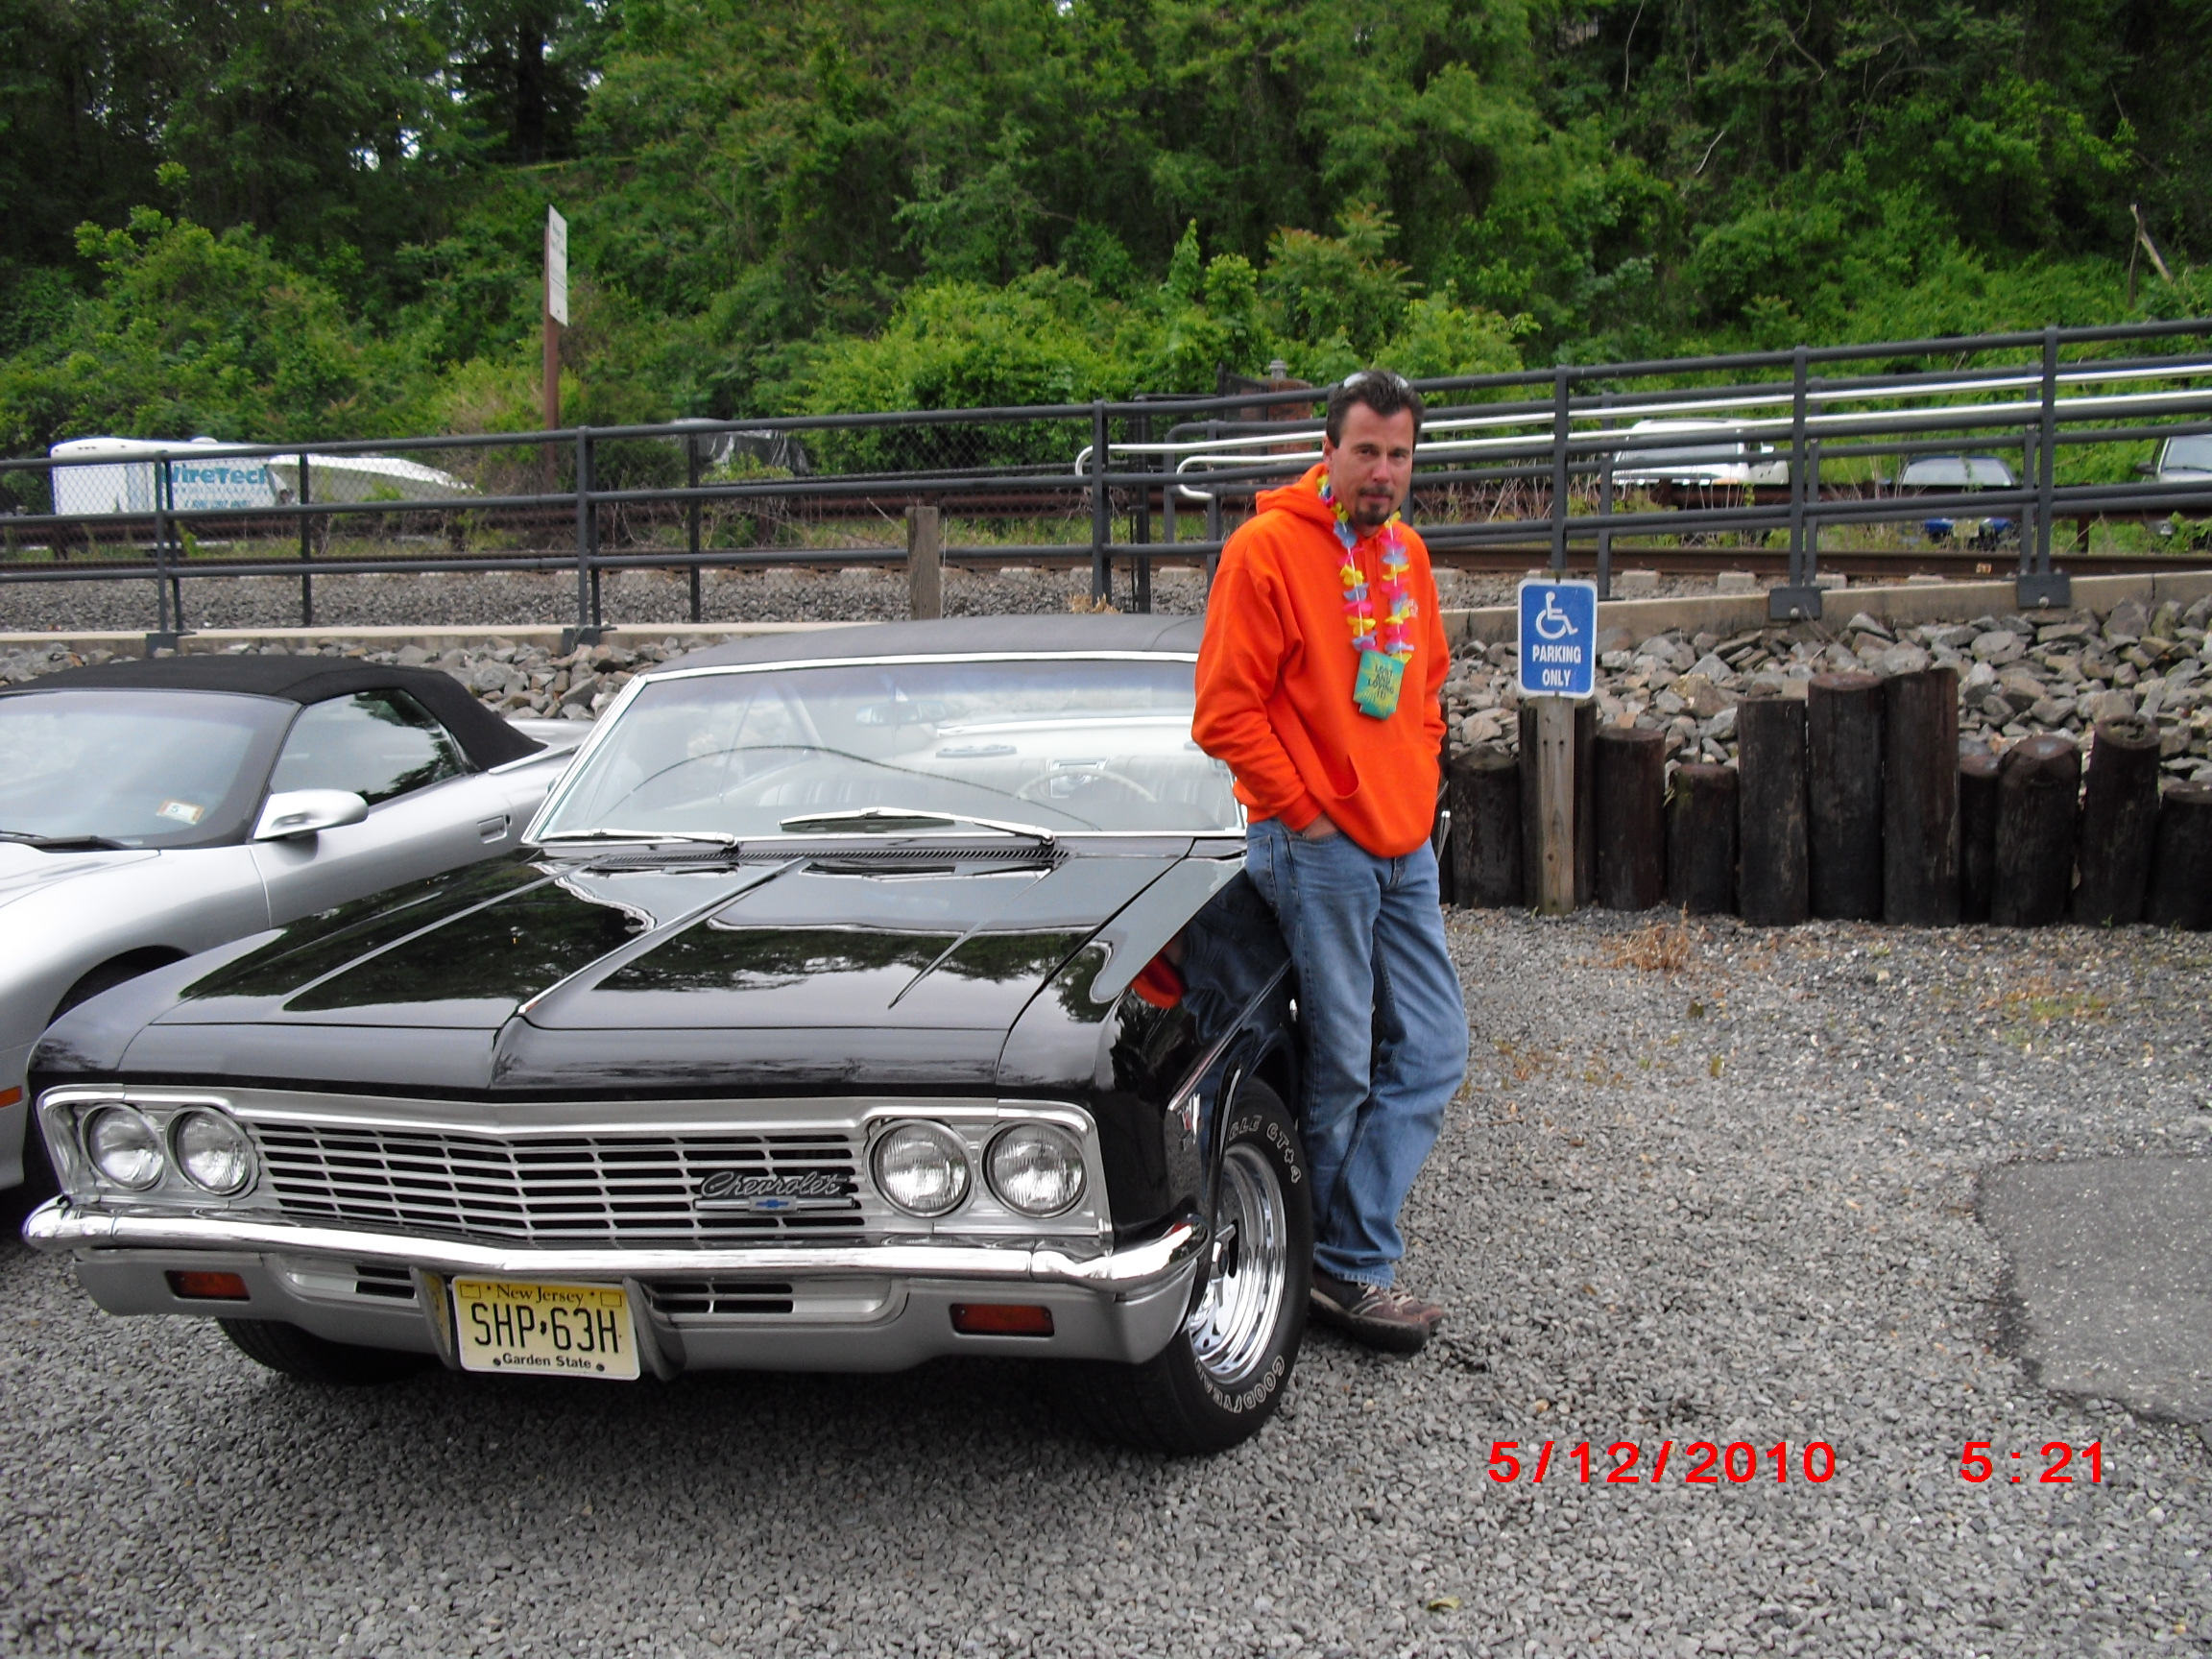 Curt and his Impala 5-12